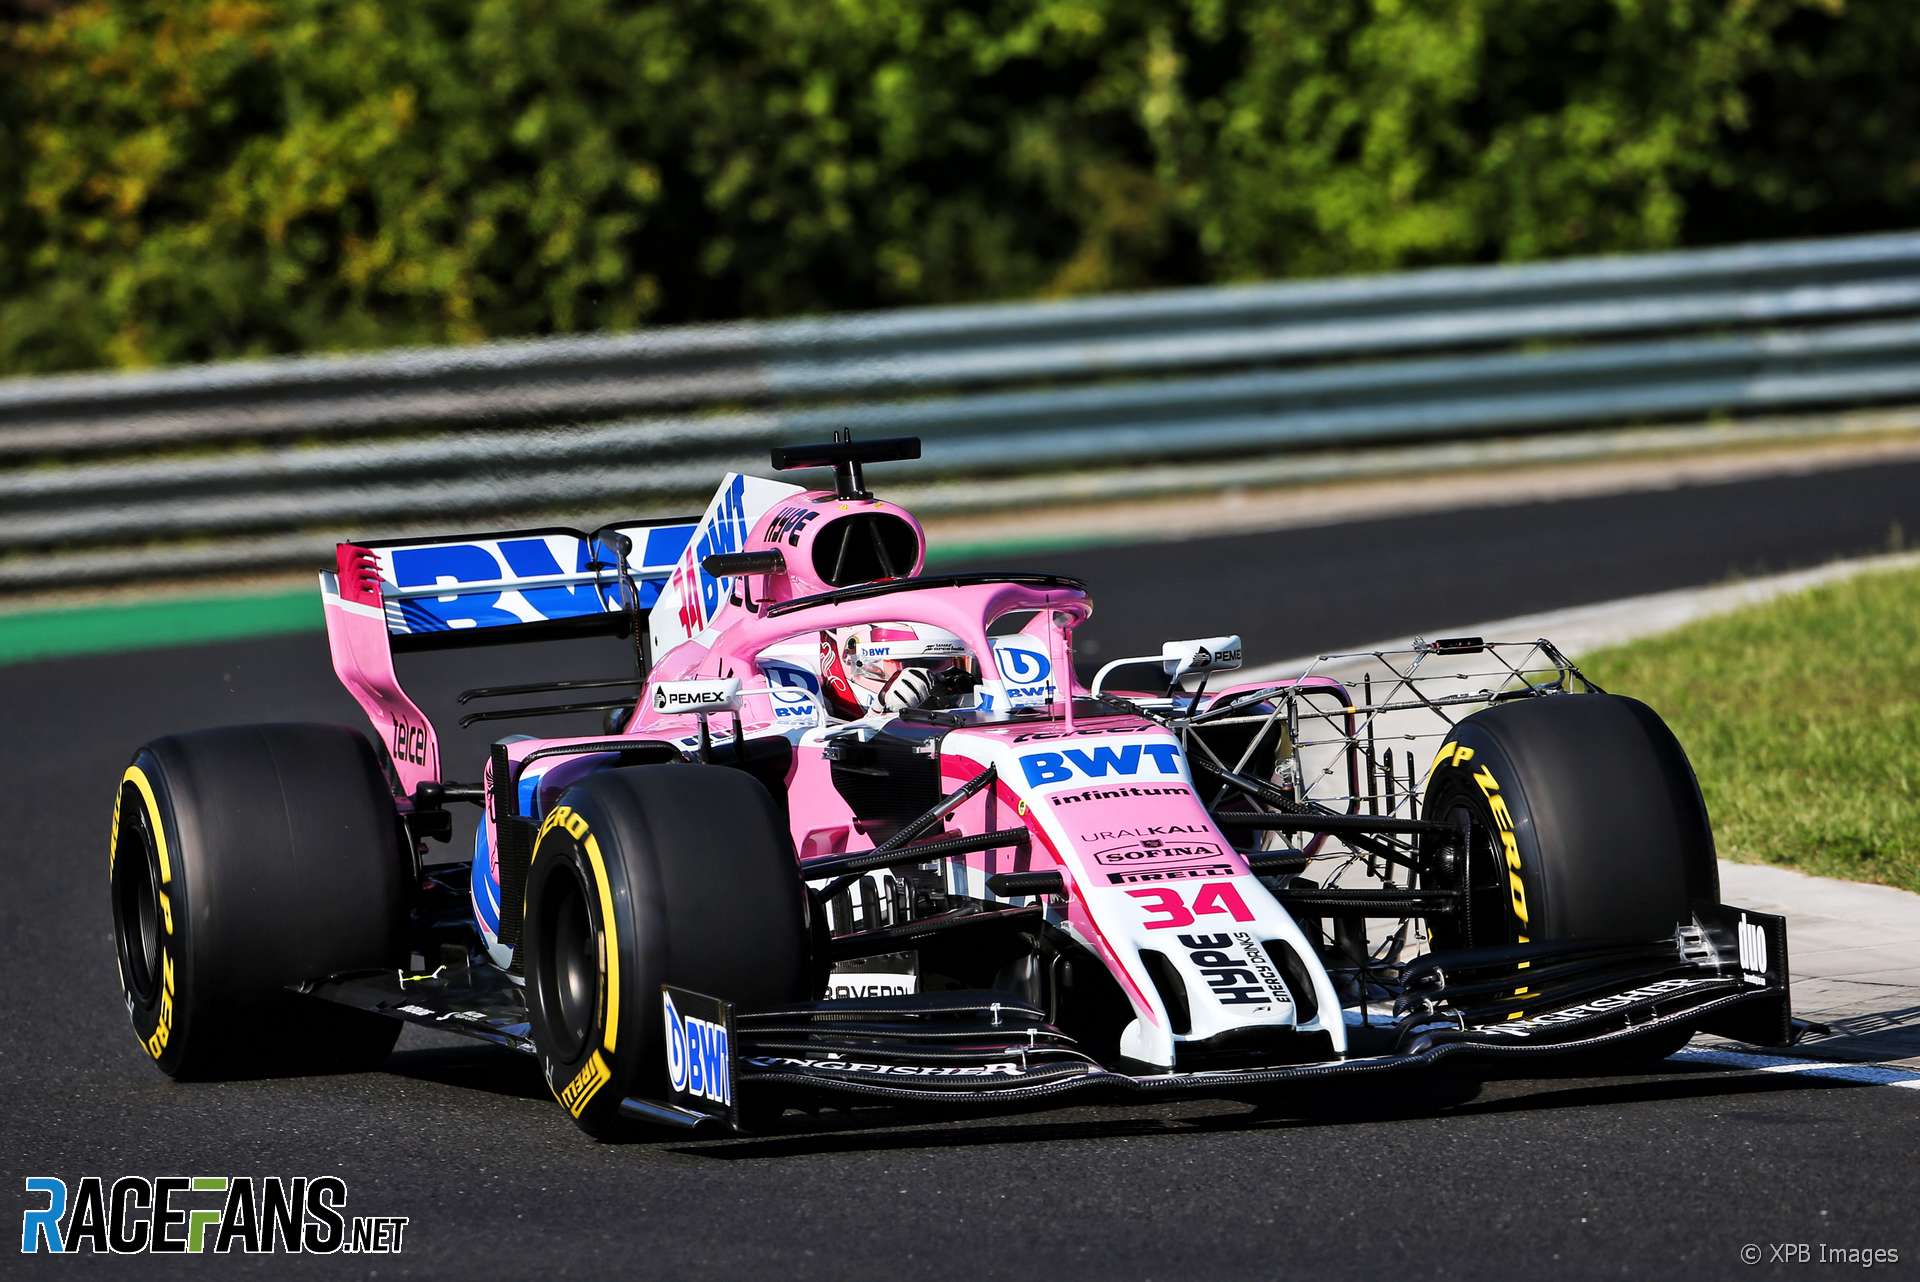 Nicholas Latifi, Force India, Hungaroring, 2018